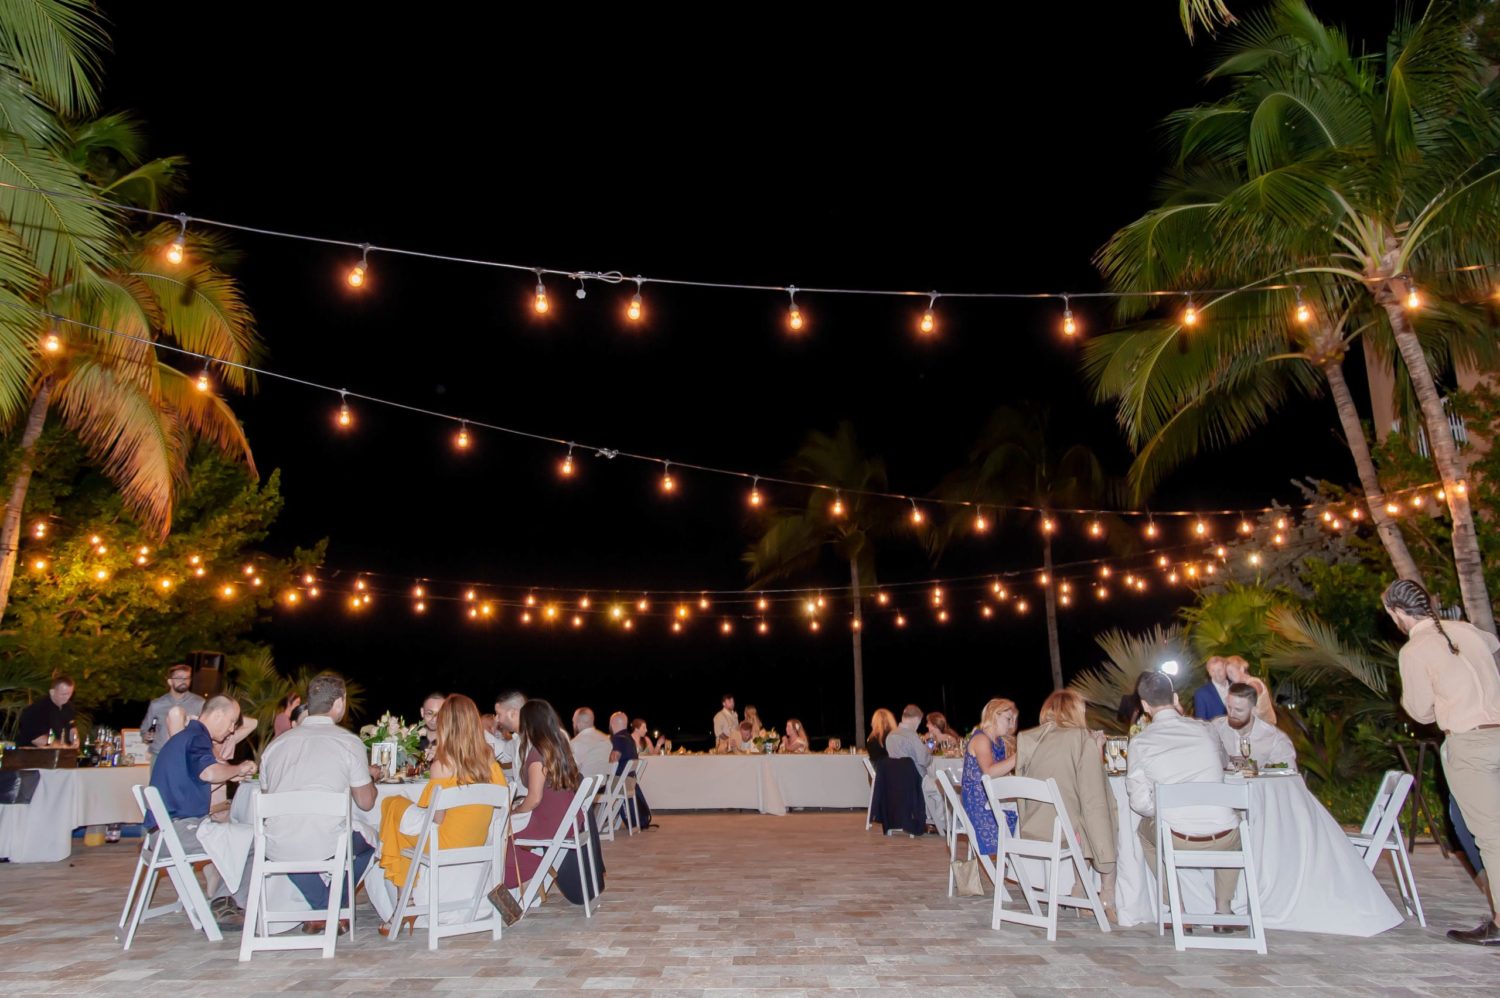 florida beach wedding reception at night with lights